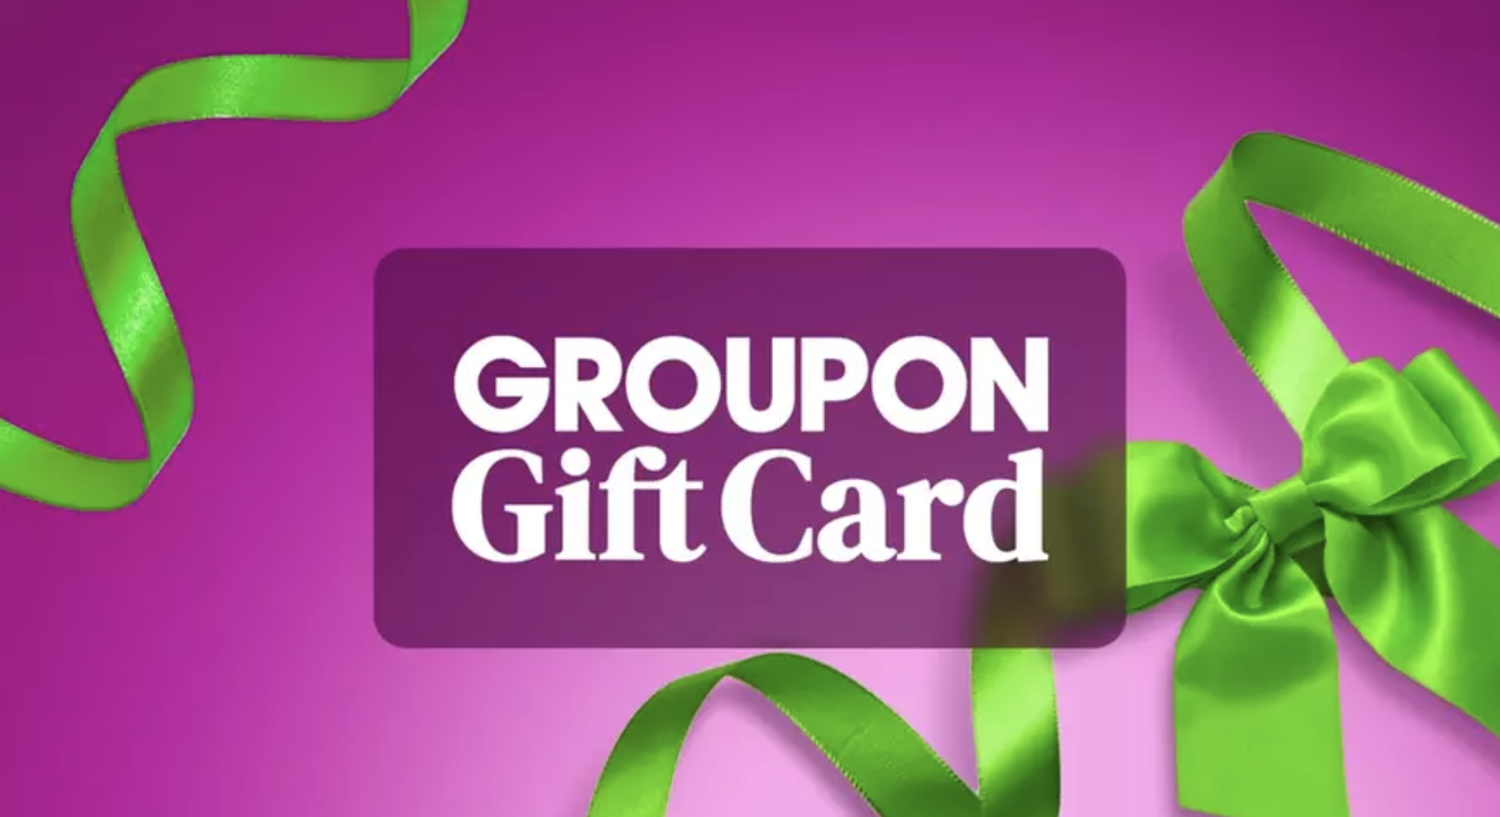 Groupon gift card